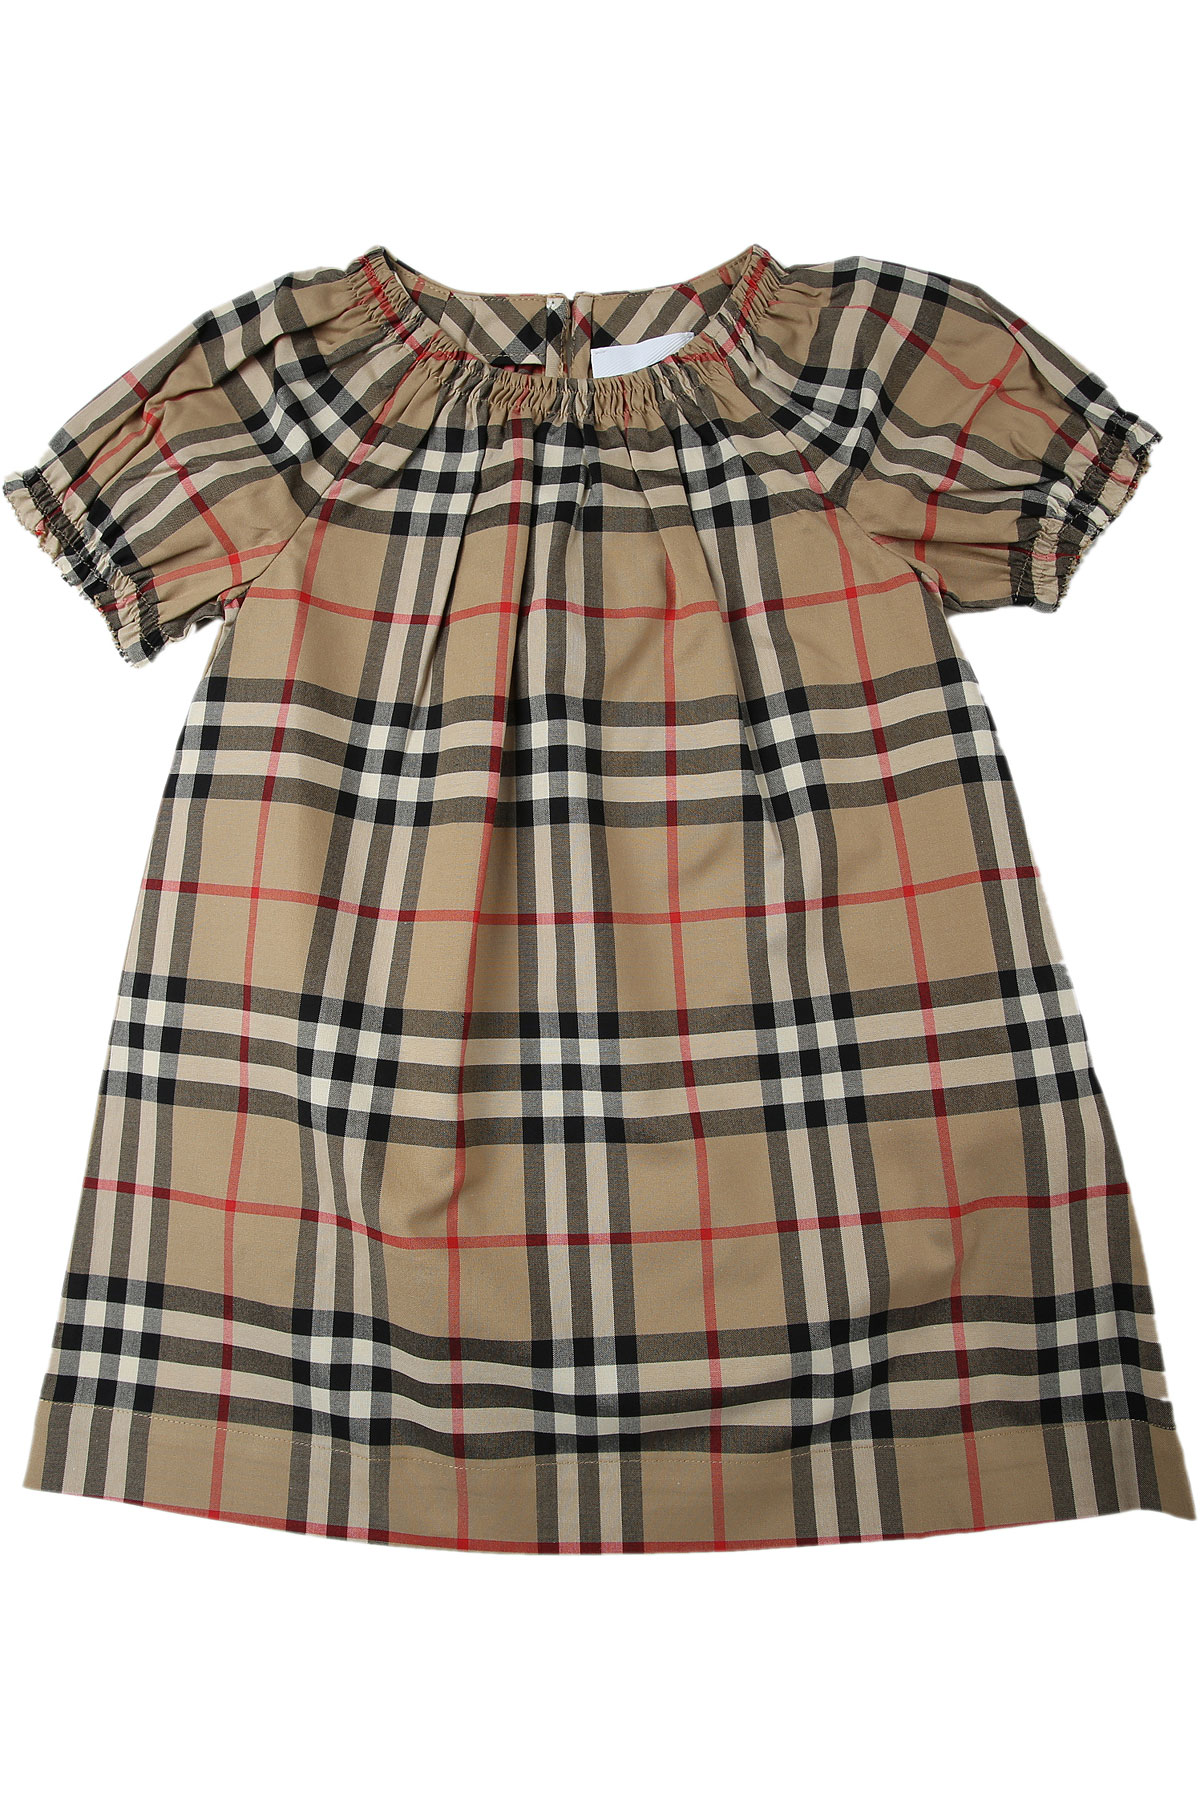 Burberry Infant Dress Sale Ireland, SAVE 55% 